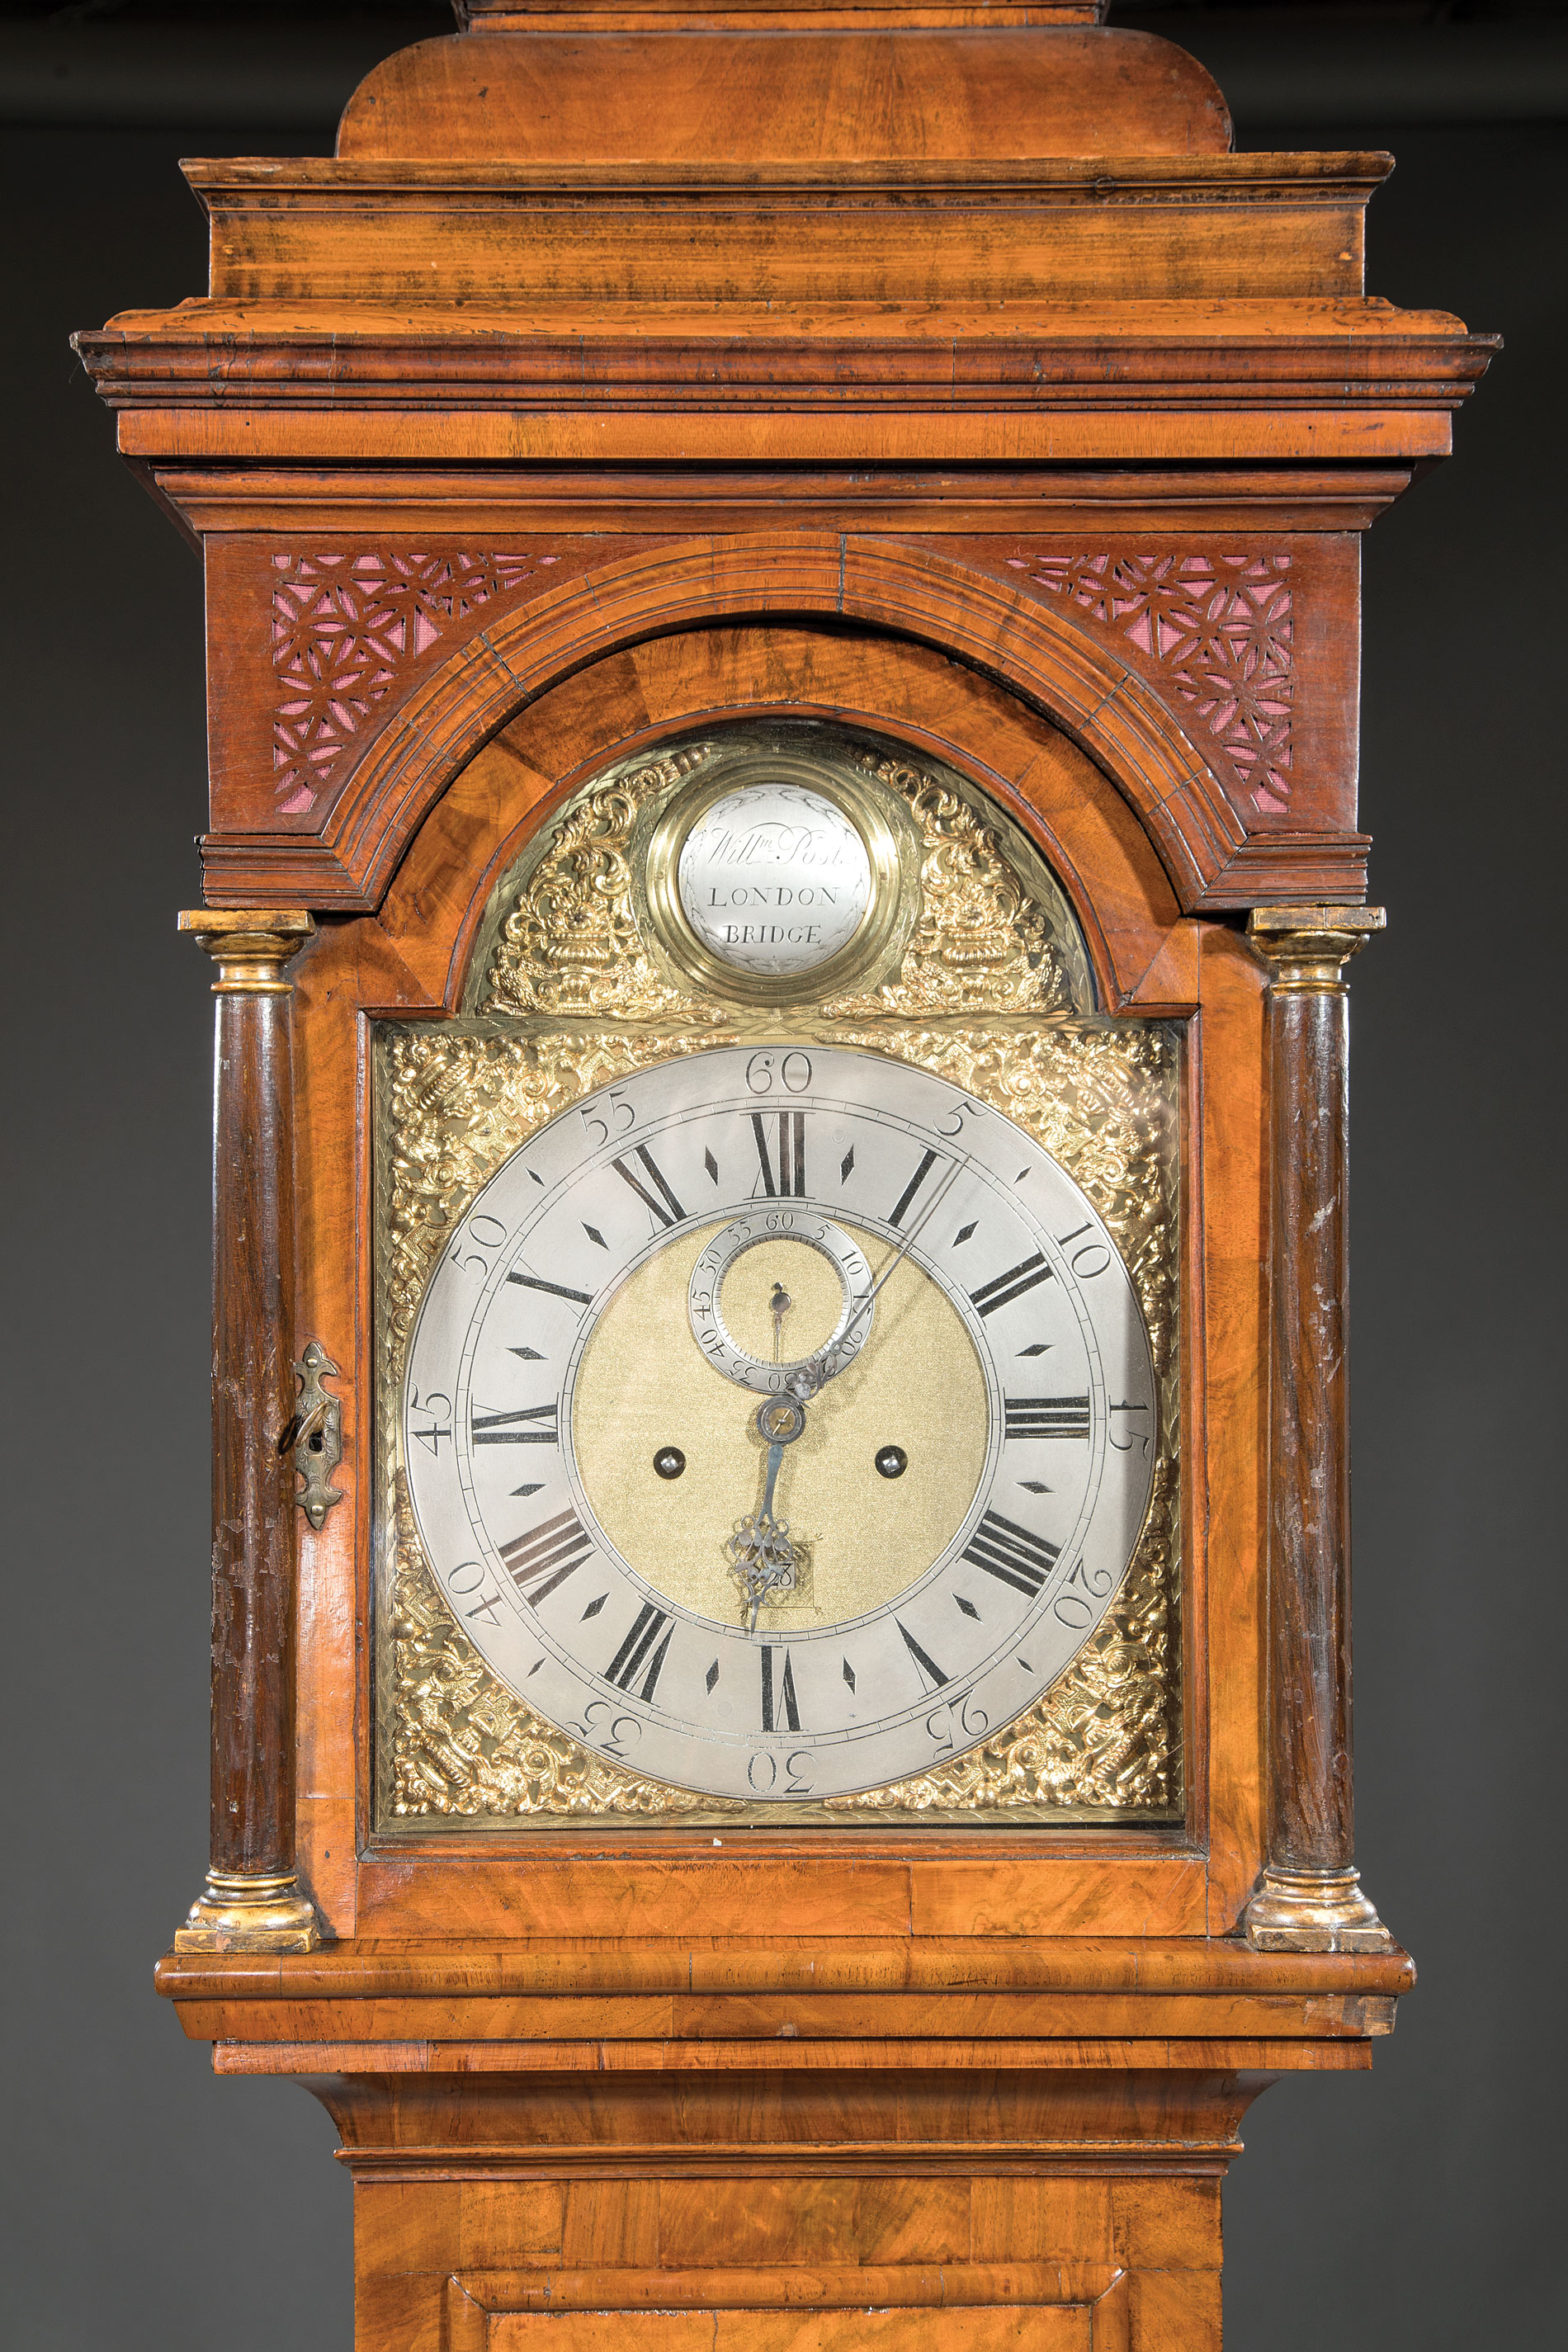 George II Burl Walnut Tall Case Clock , c. 1727, by William Post, London Bridge, eight day - Image 3 of 3